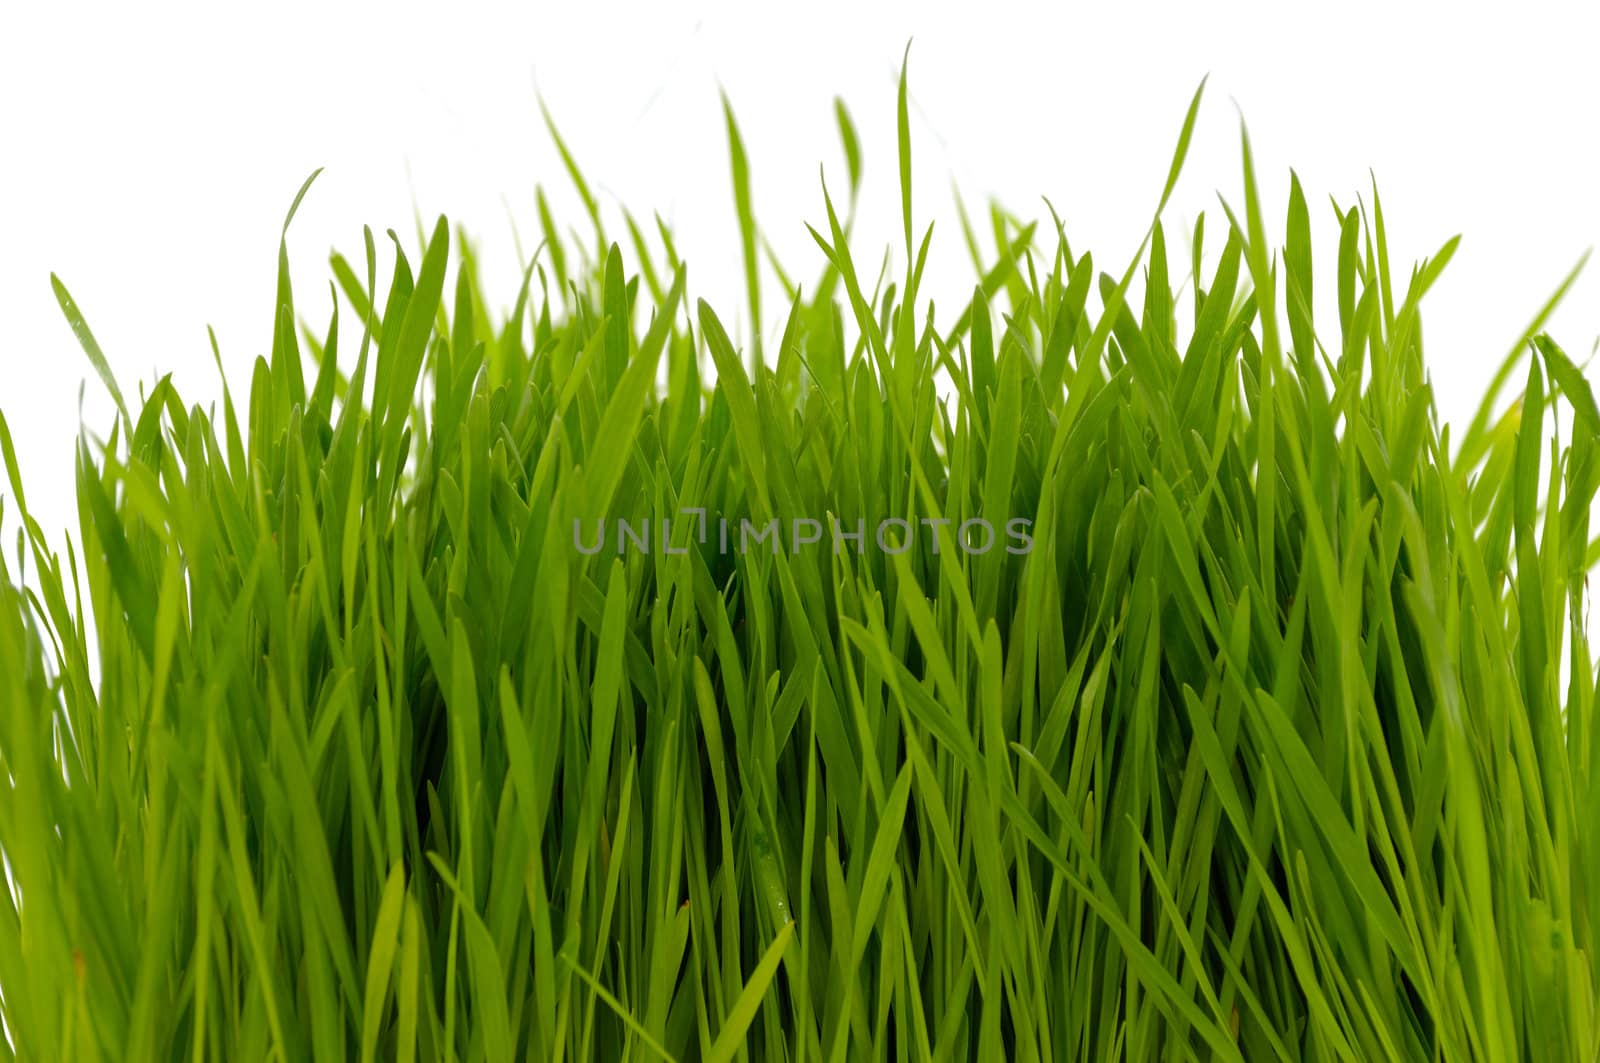 Grass taken on a clean white background.